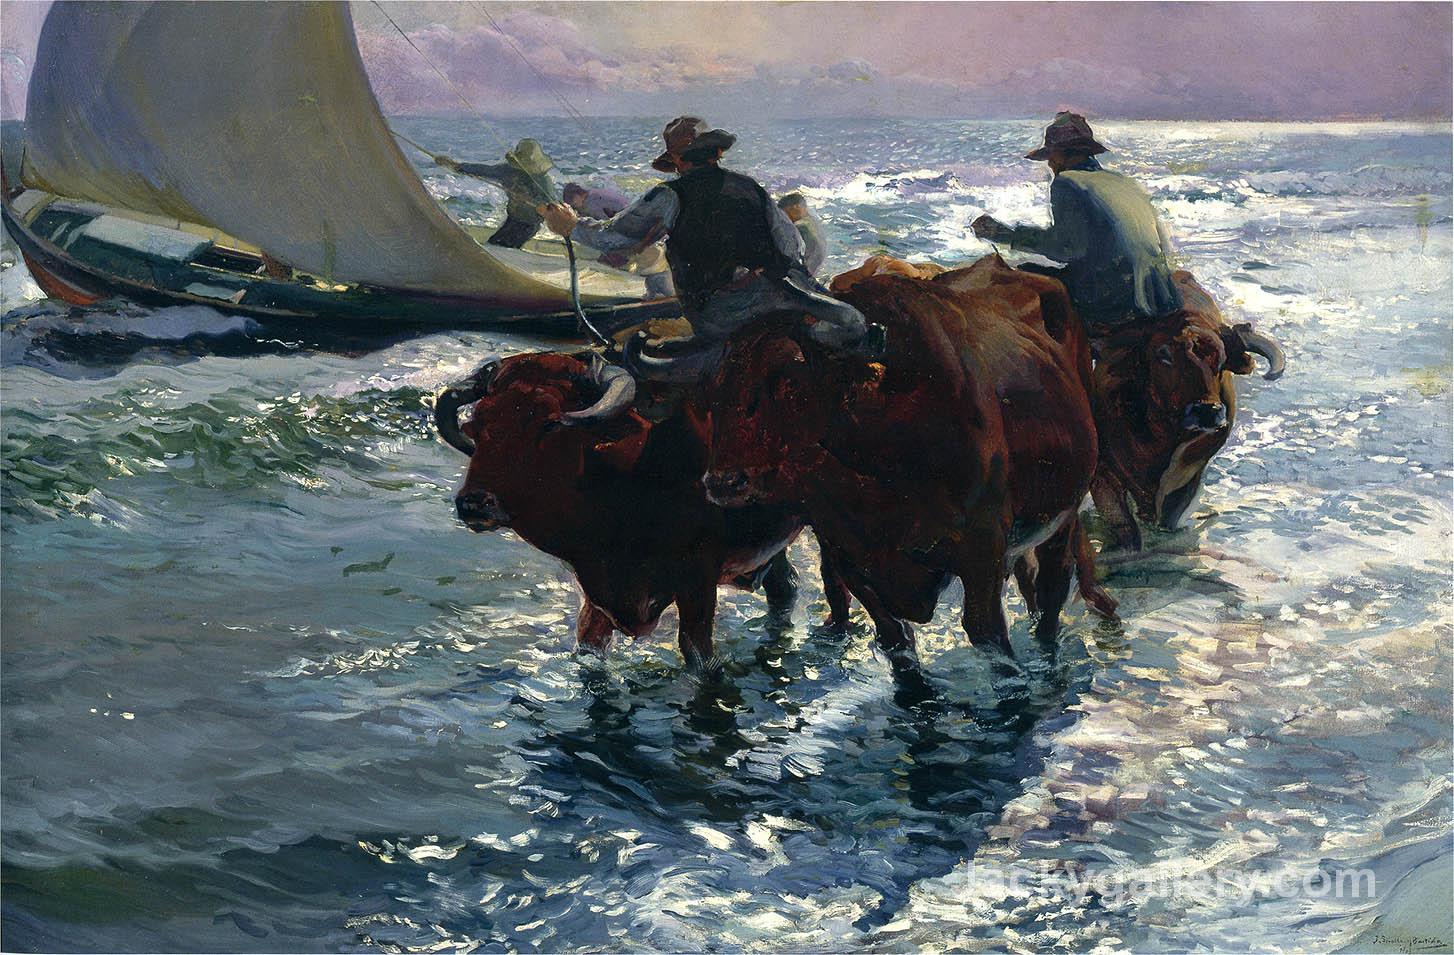 Bulls in the Sea by Joaquin Sorolla y Bastida paintings reproduction